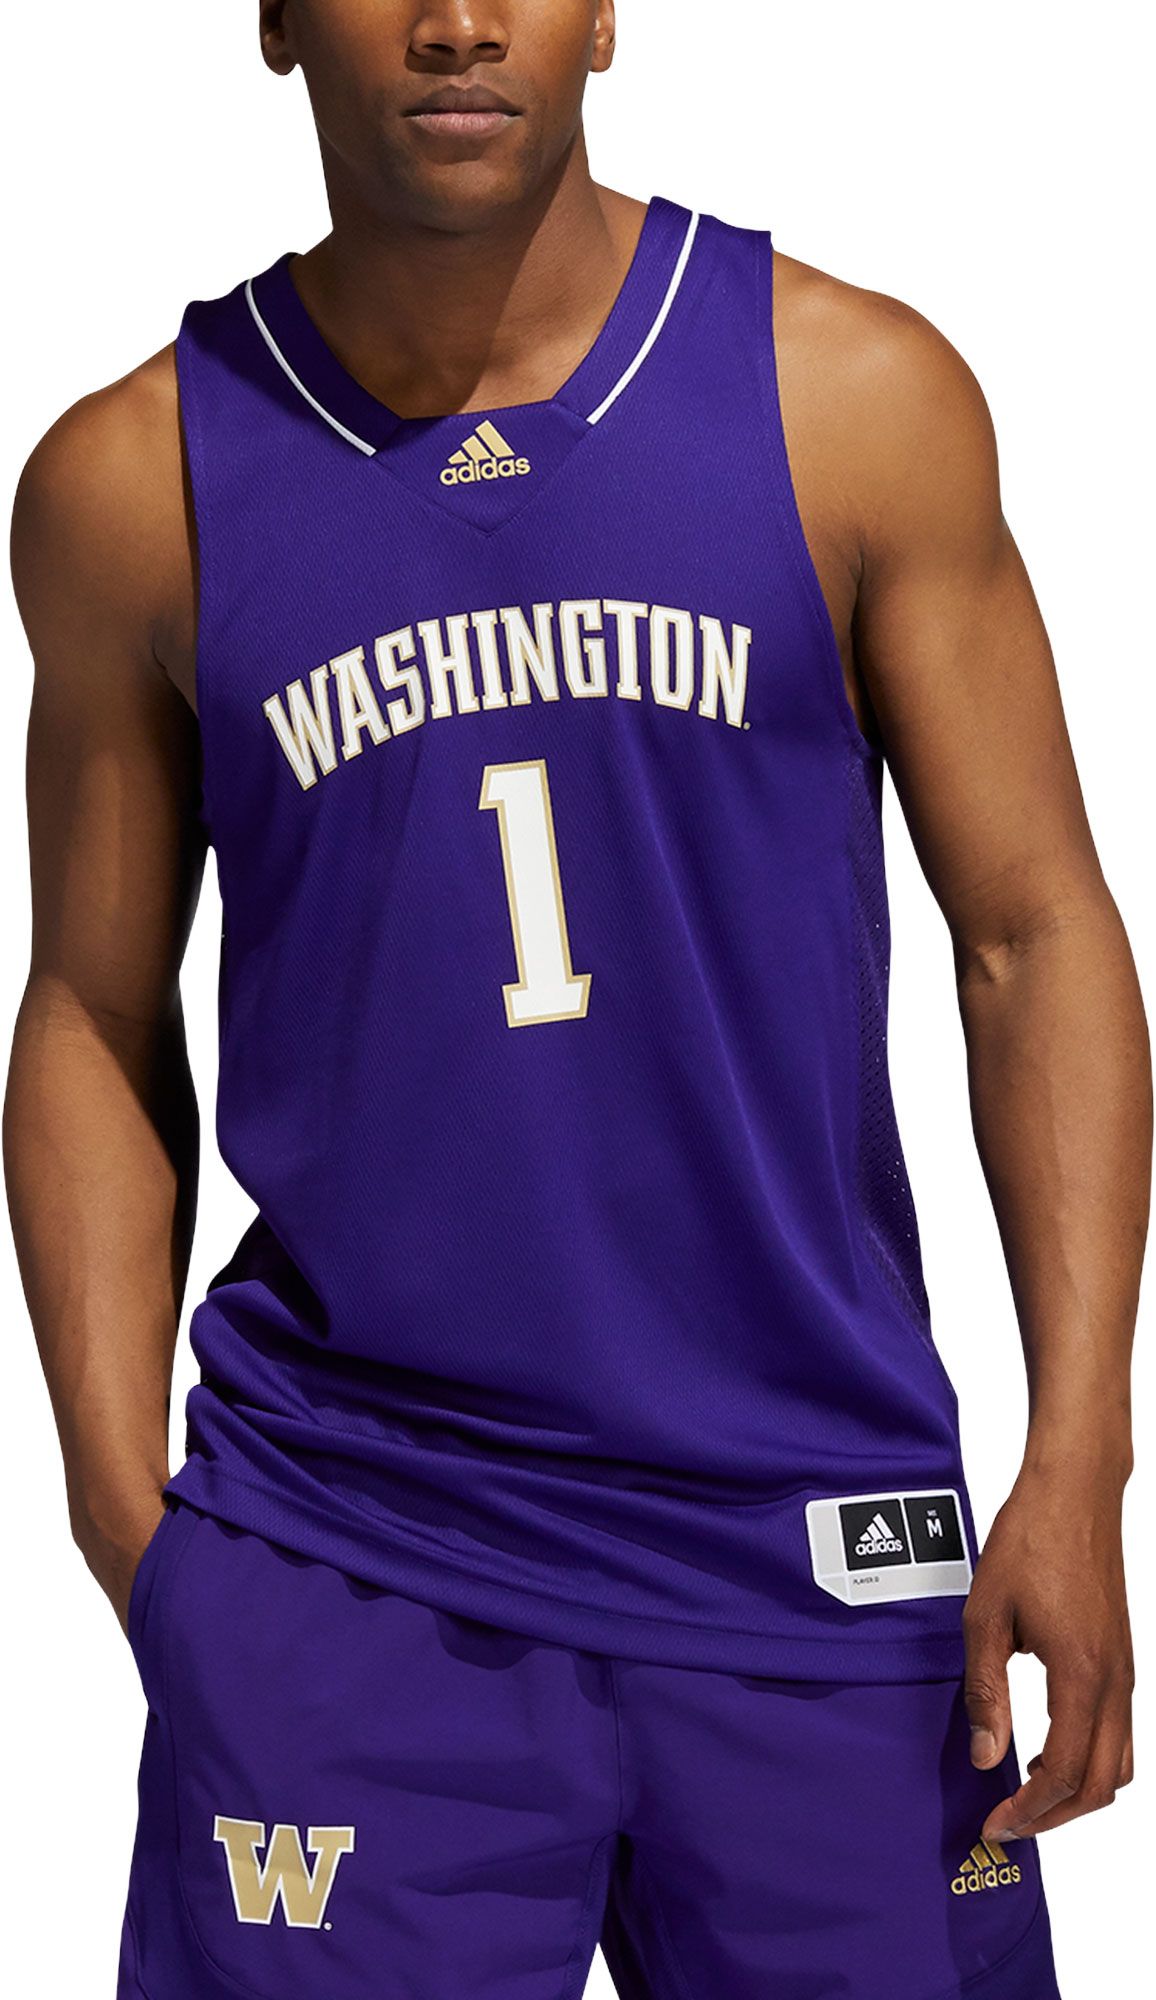 adidas Men's Washington Huskies #1 Purple Swingman Replica Basketball Jersey